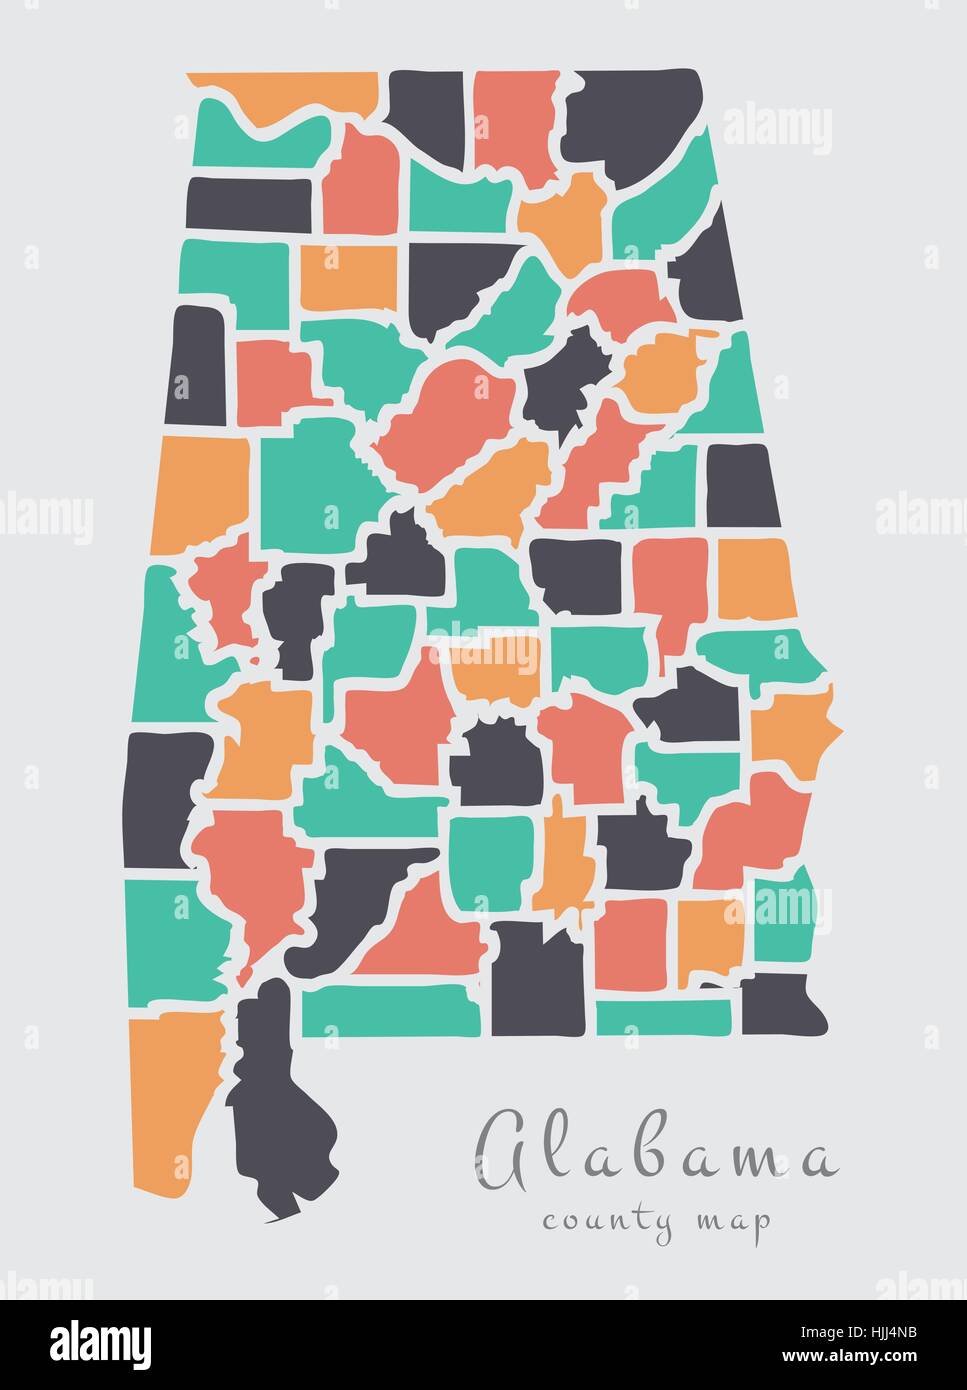 Modern Map - Alabama county map USA round shape illustration Stock Vector